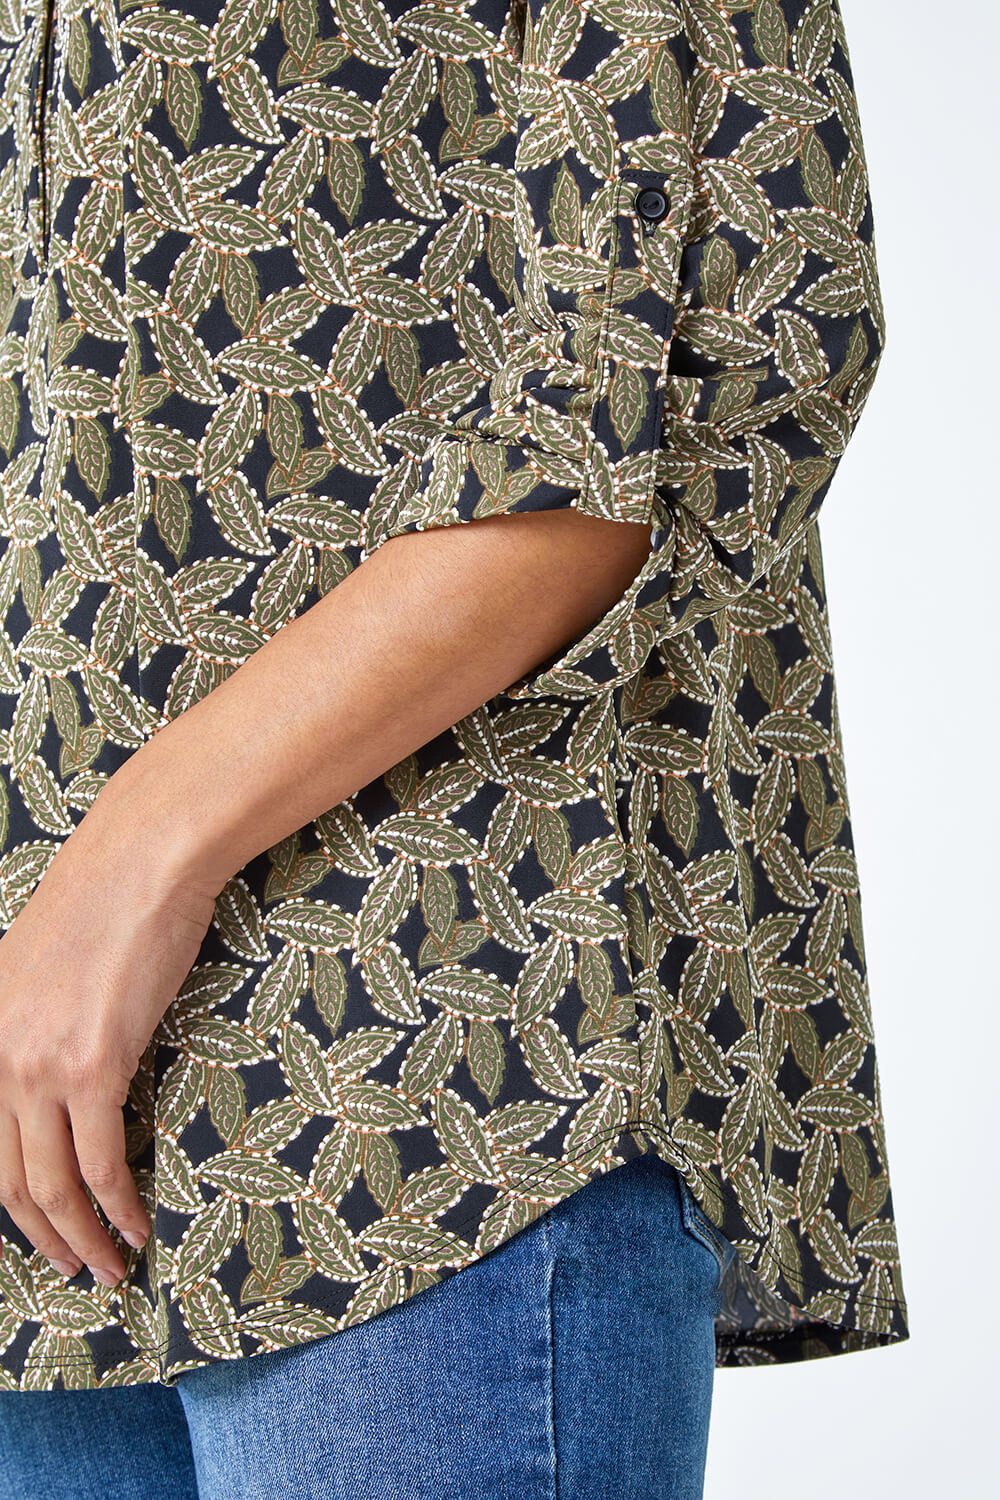 KHAKI Textured Ditsy Leaf Print Stretch Shirt, Image 5 of 5